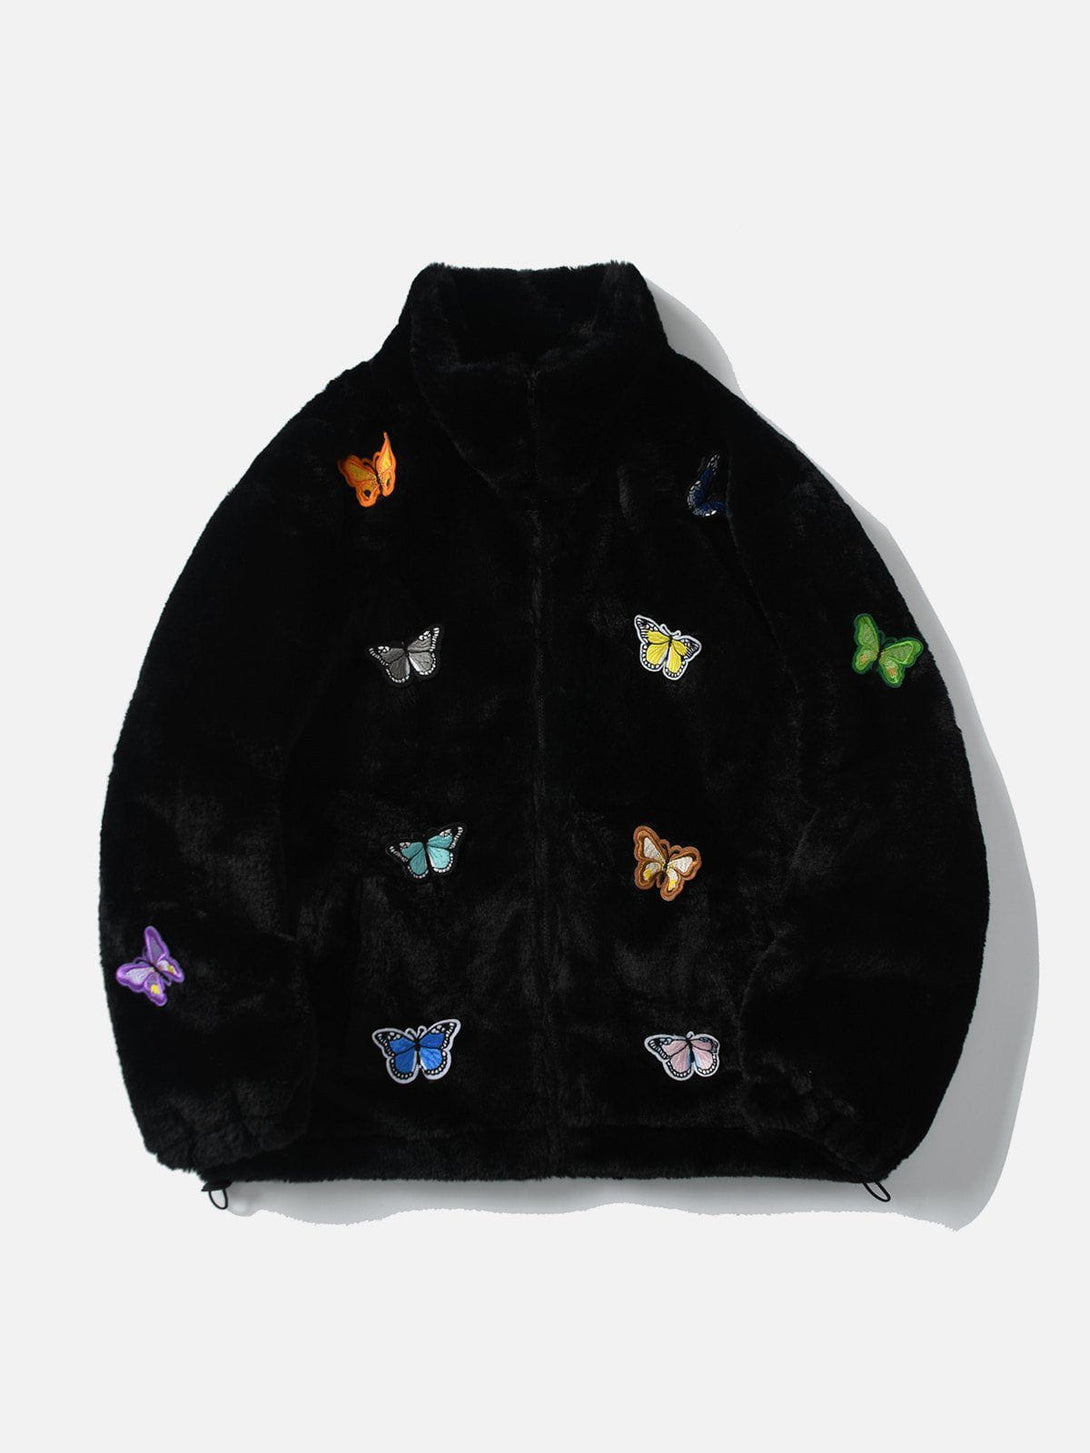 Majesda® - Embroidery Butterfly Sherpa Jacket outfit ideas streetwear fashion